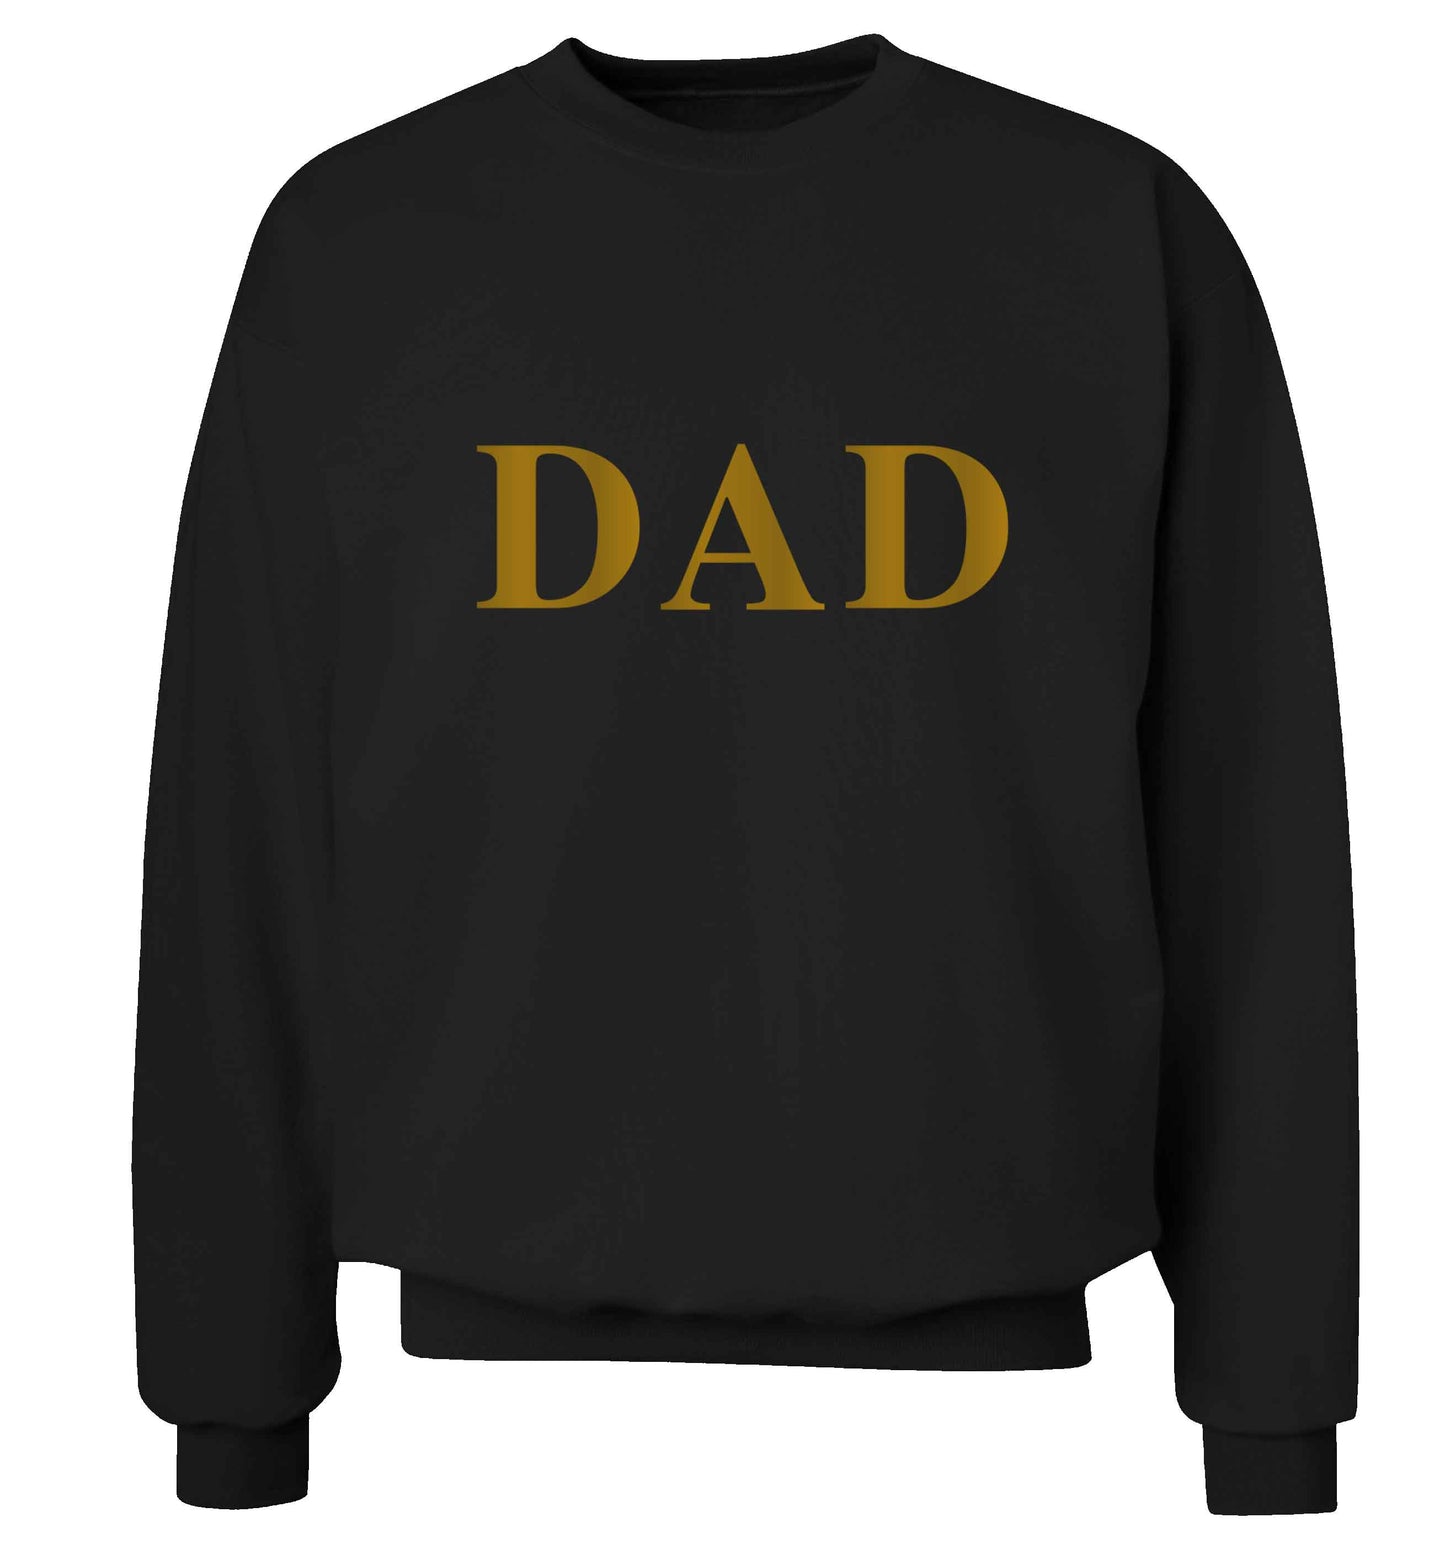 Dad adult's unisex black sweater 2XL